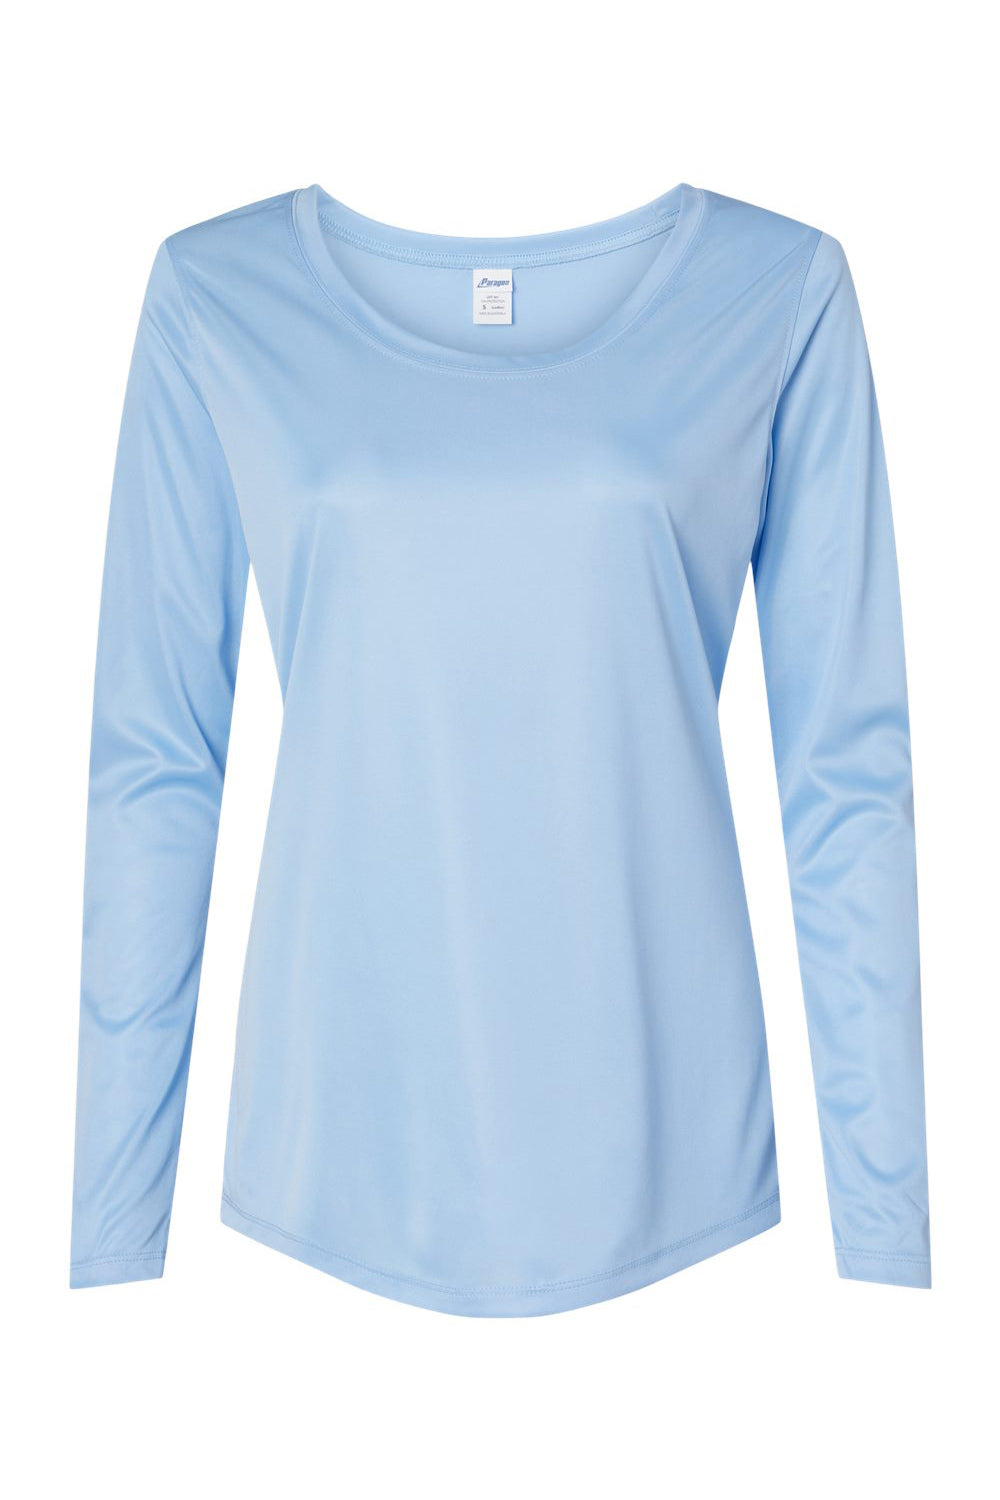 Paragon 214 Womens Islander Performance Long Sleeve Scoop Neck T-Shirt Blue Mist Flat Front